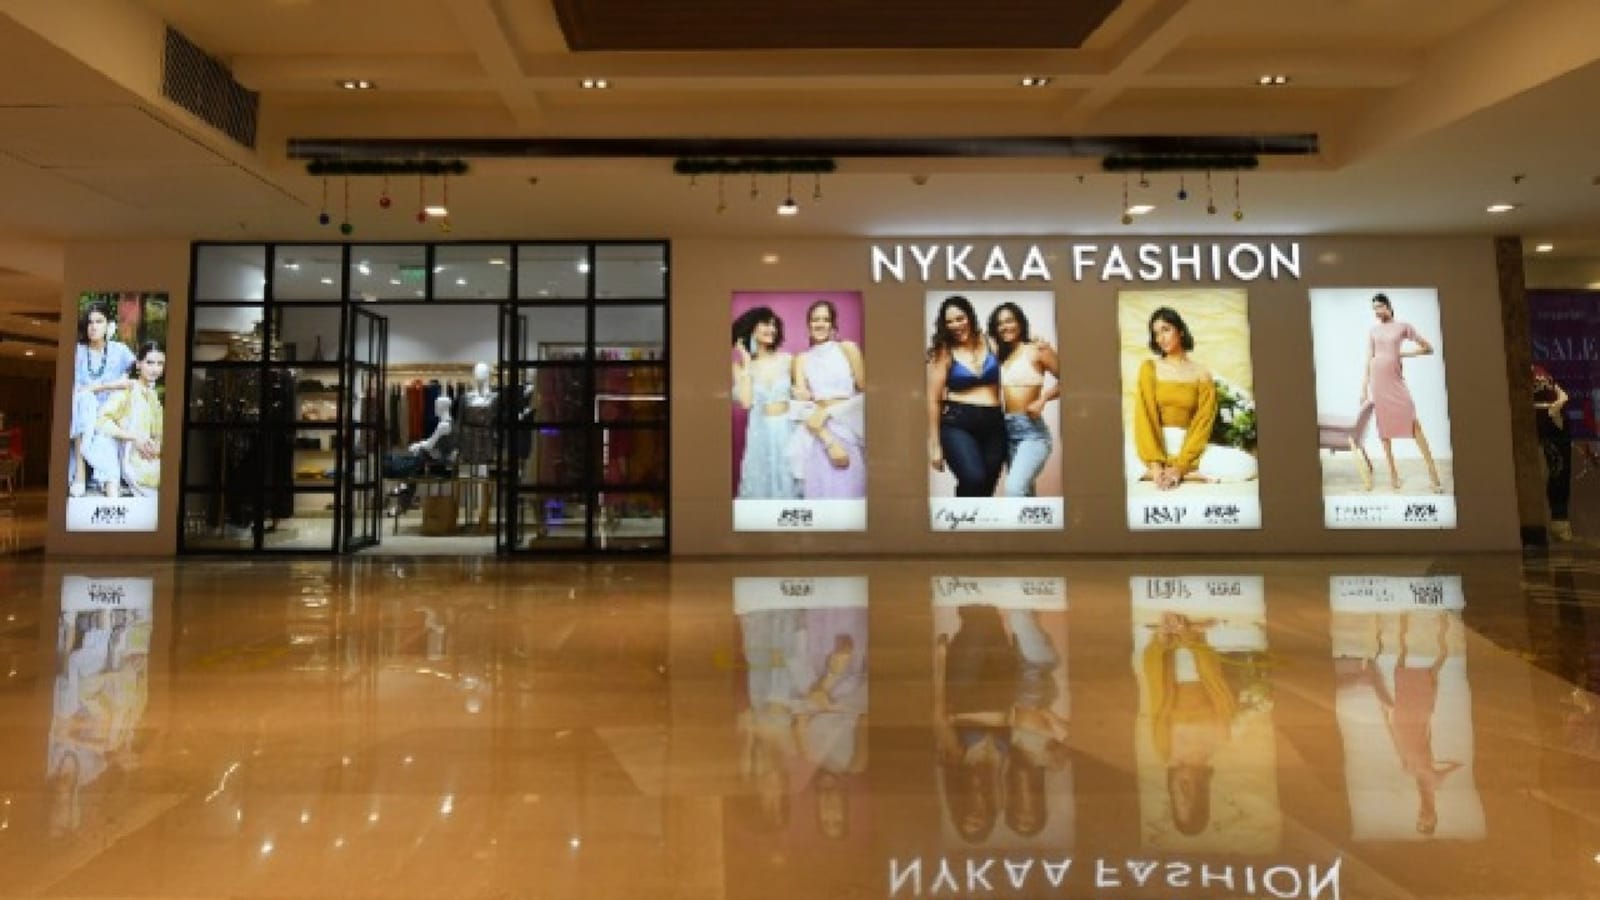 Nykaa Fashion brings global e-tailer REVOLVE to India